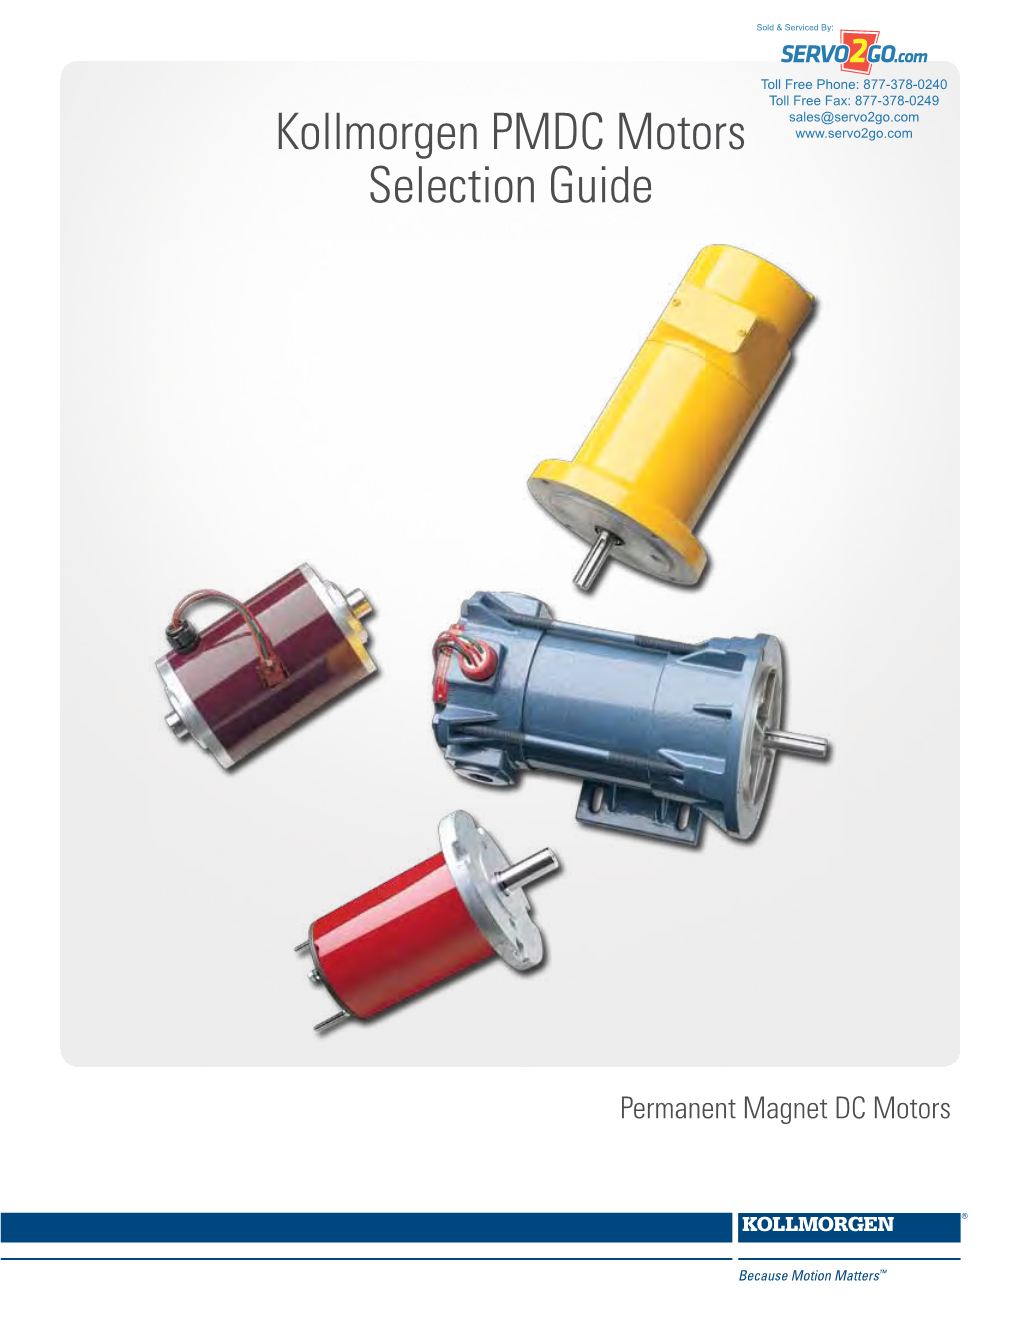 Kollmorgen PMDC Motors Selection Guide